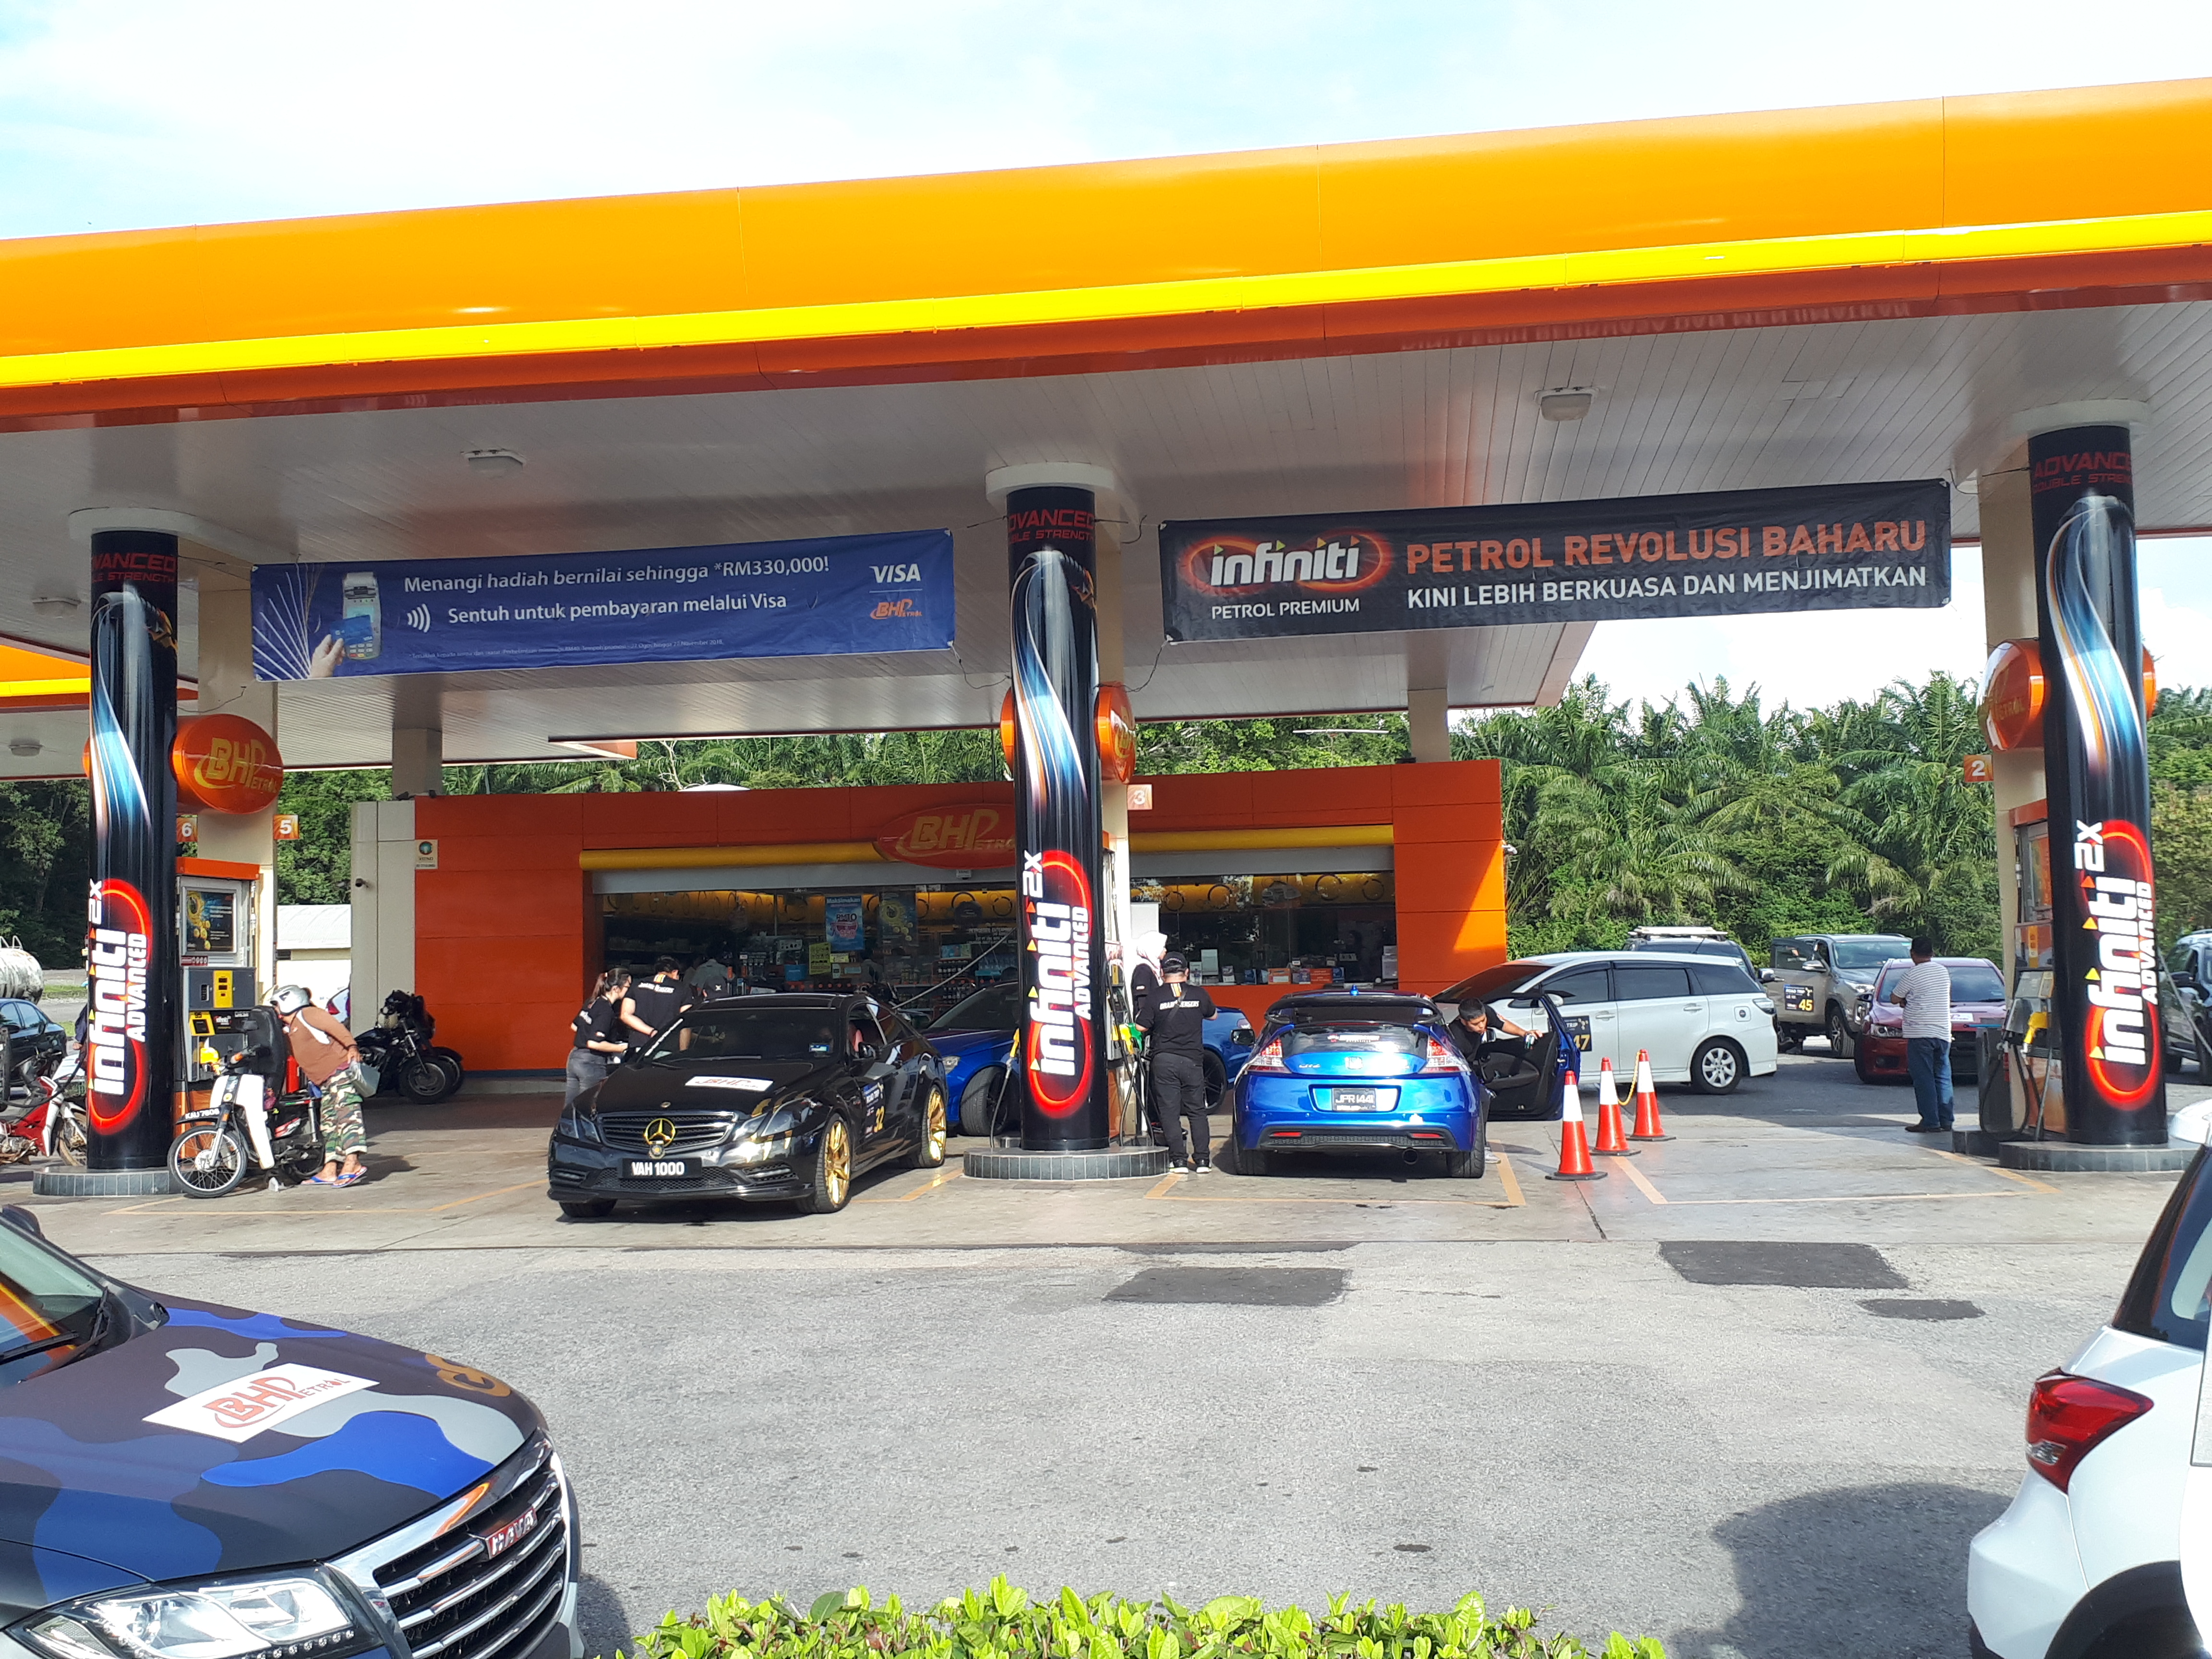 Bhp petrol near me